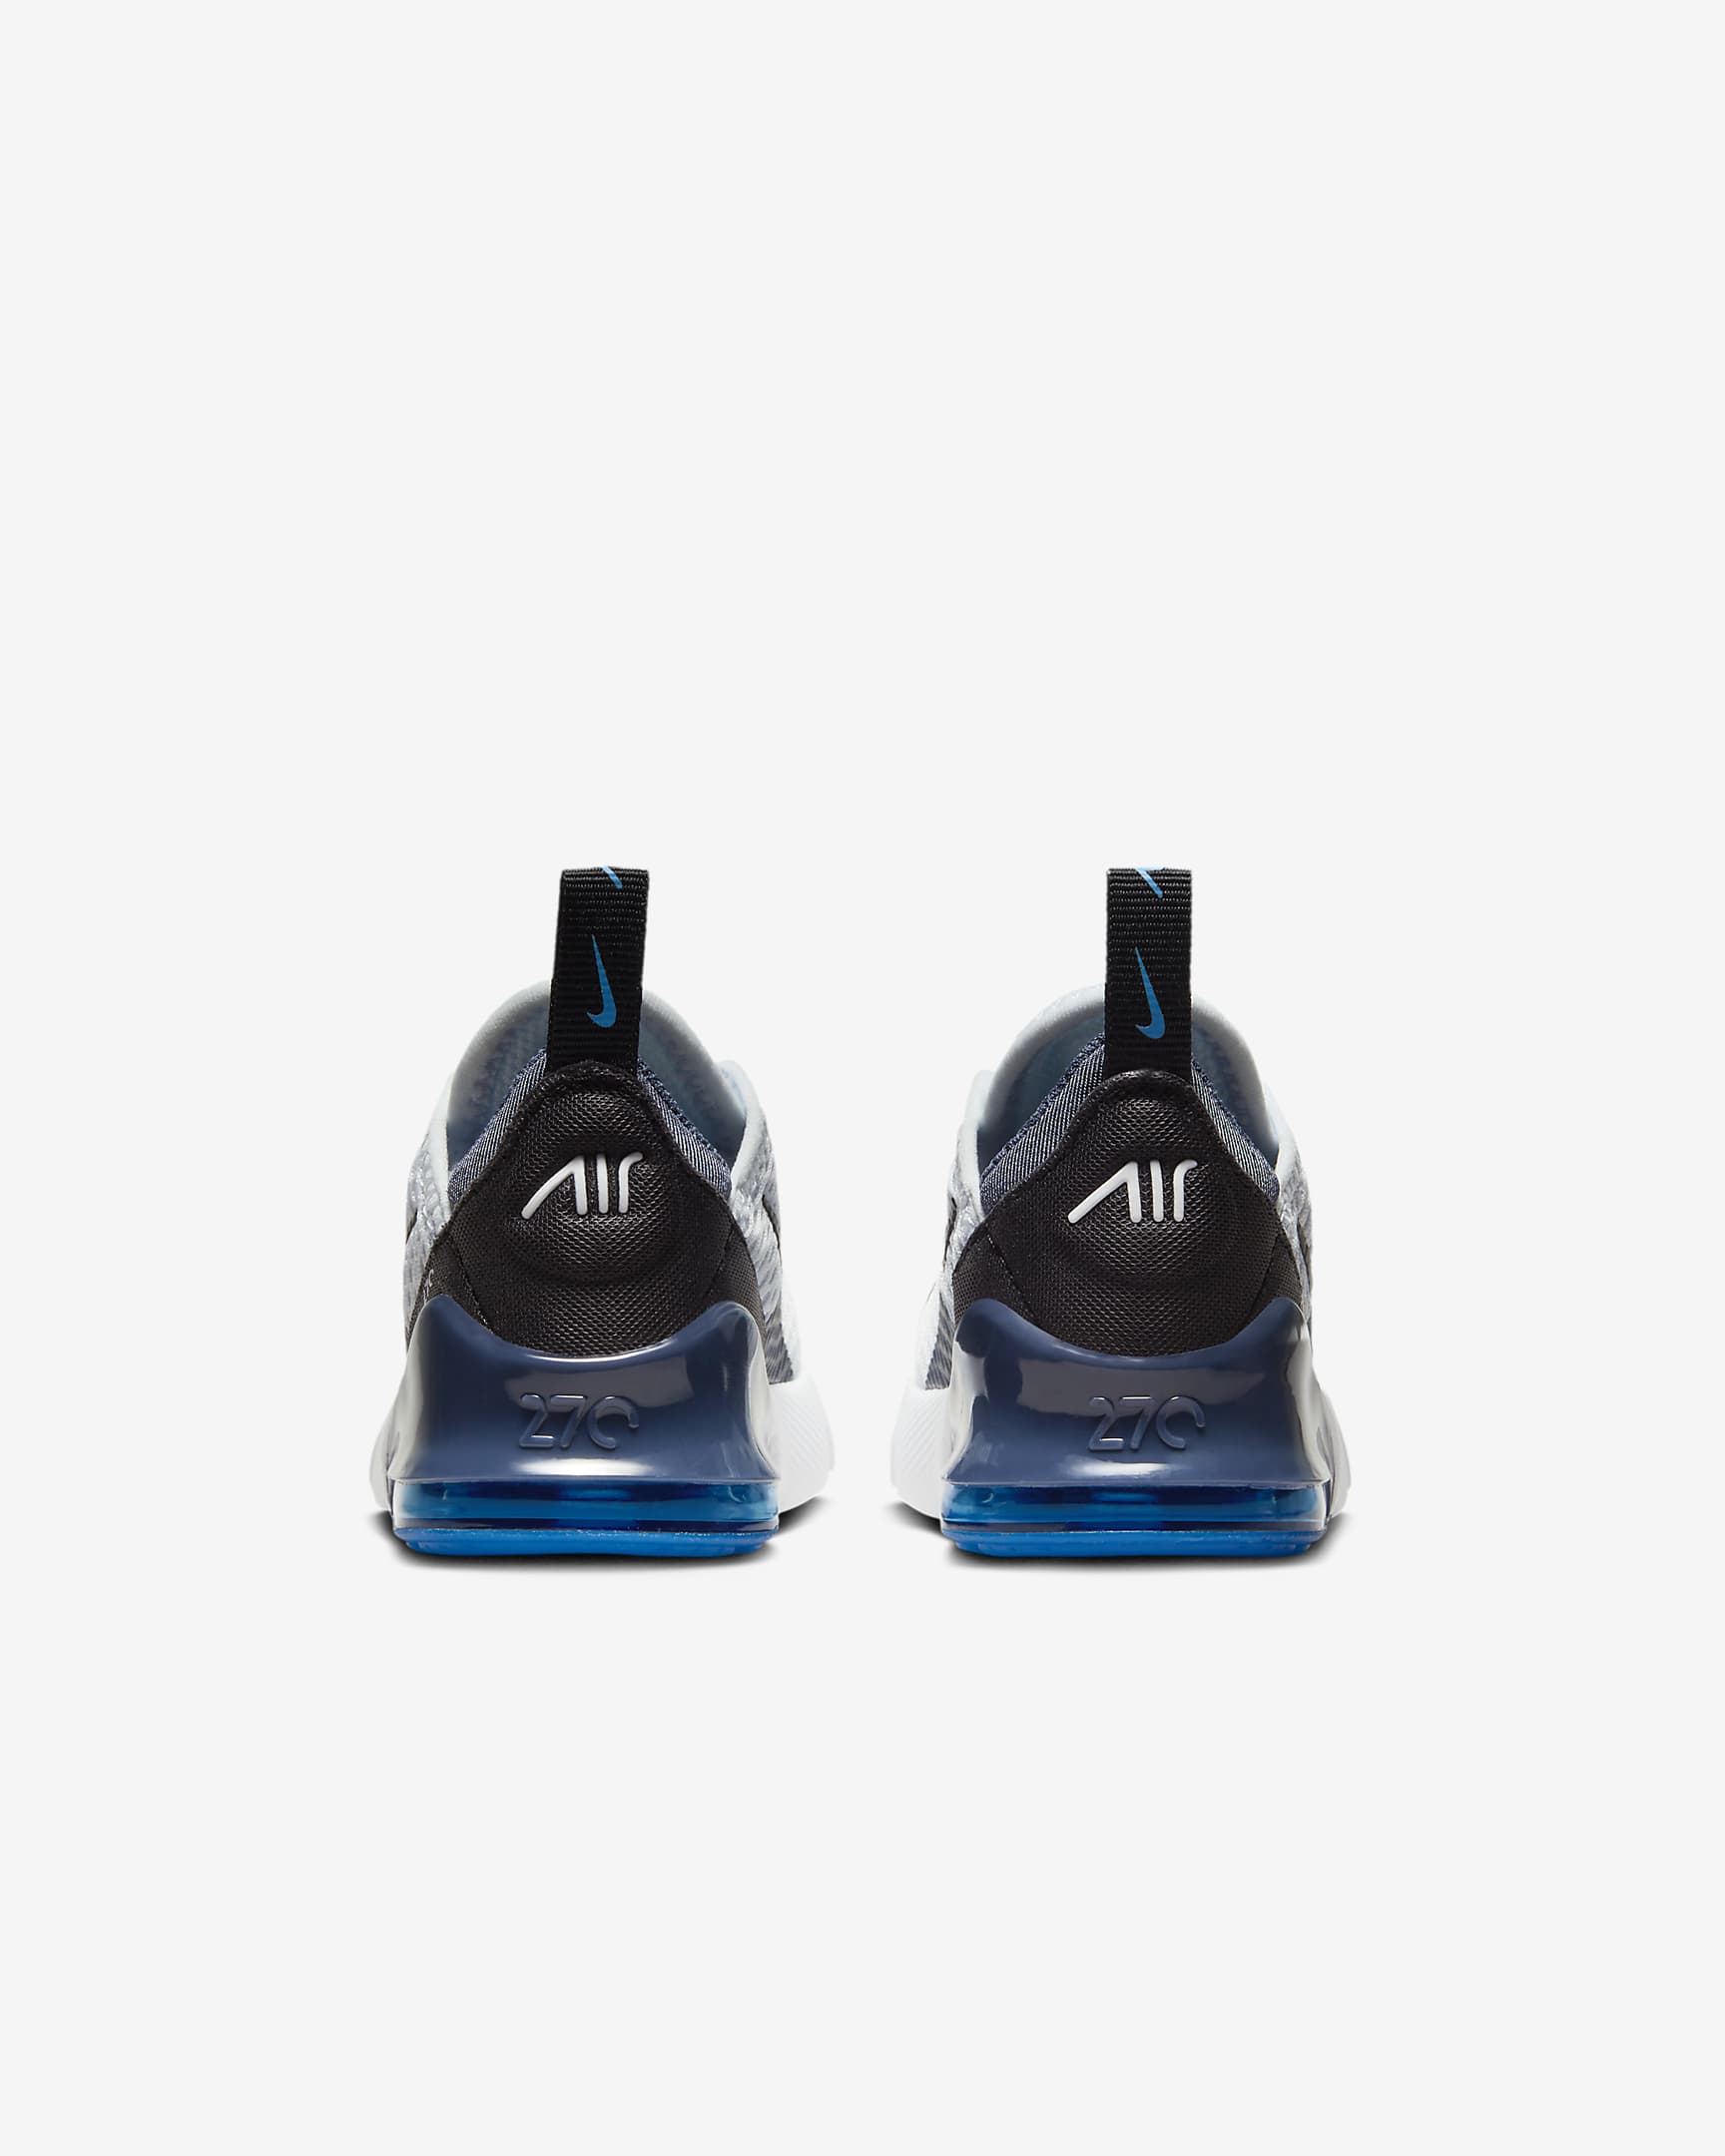 Nike Air Max 270 Baby and Toddler Shoe - Football Grey/Thunder Blue/Photo Blue/Black